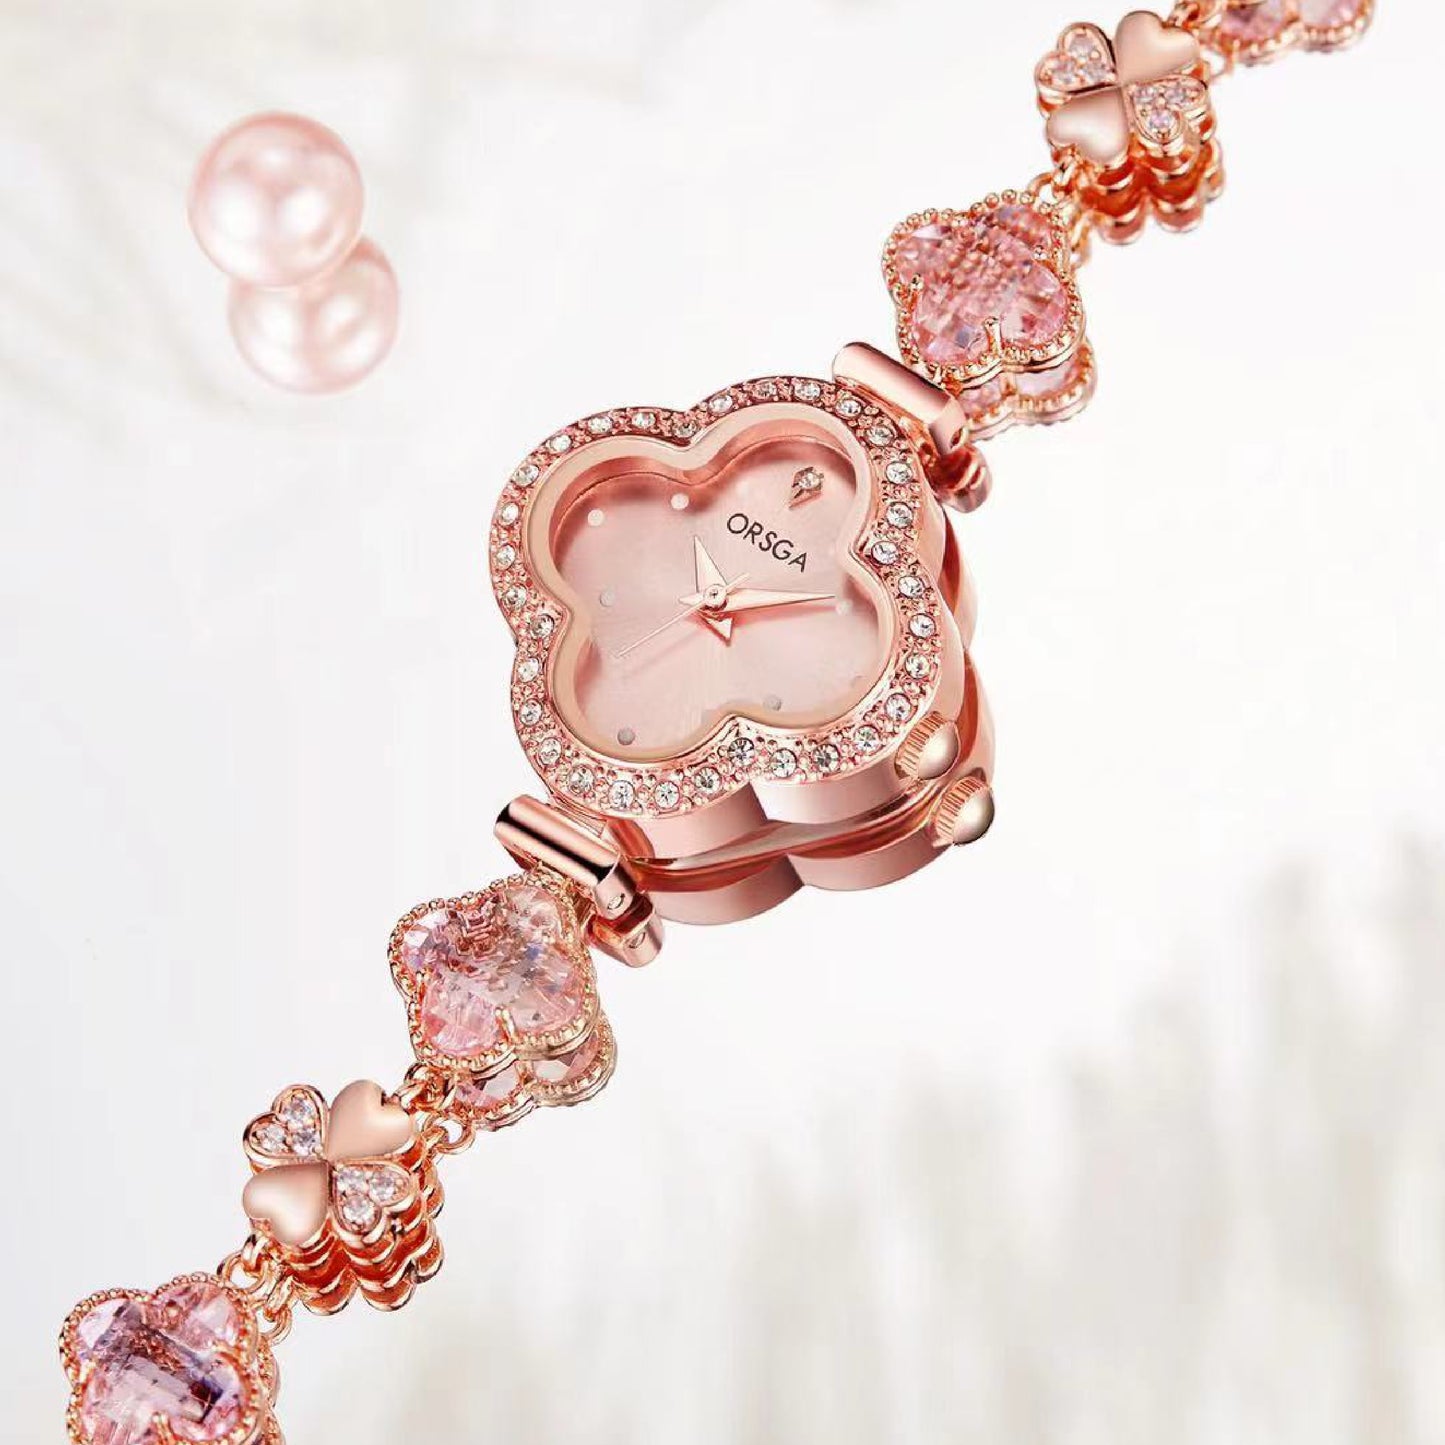 ORSGA CLOVER Pink Dial Rose Gold Watch